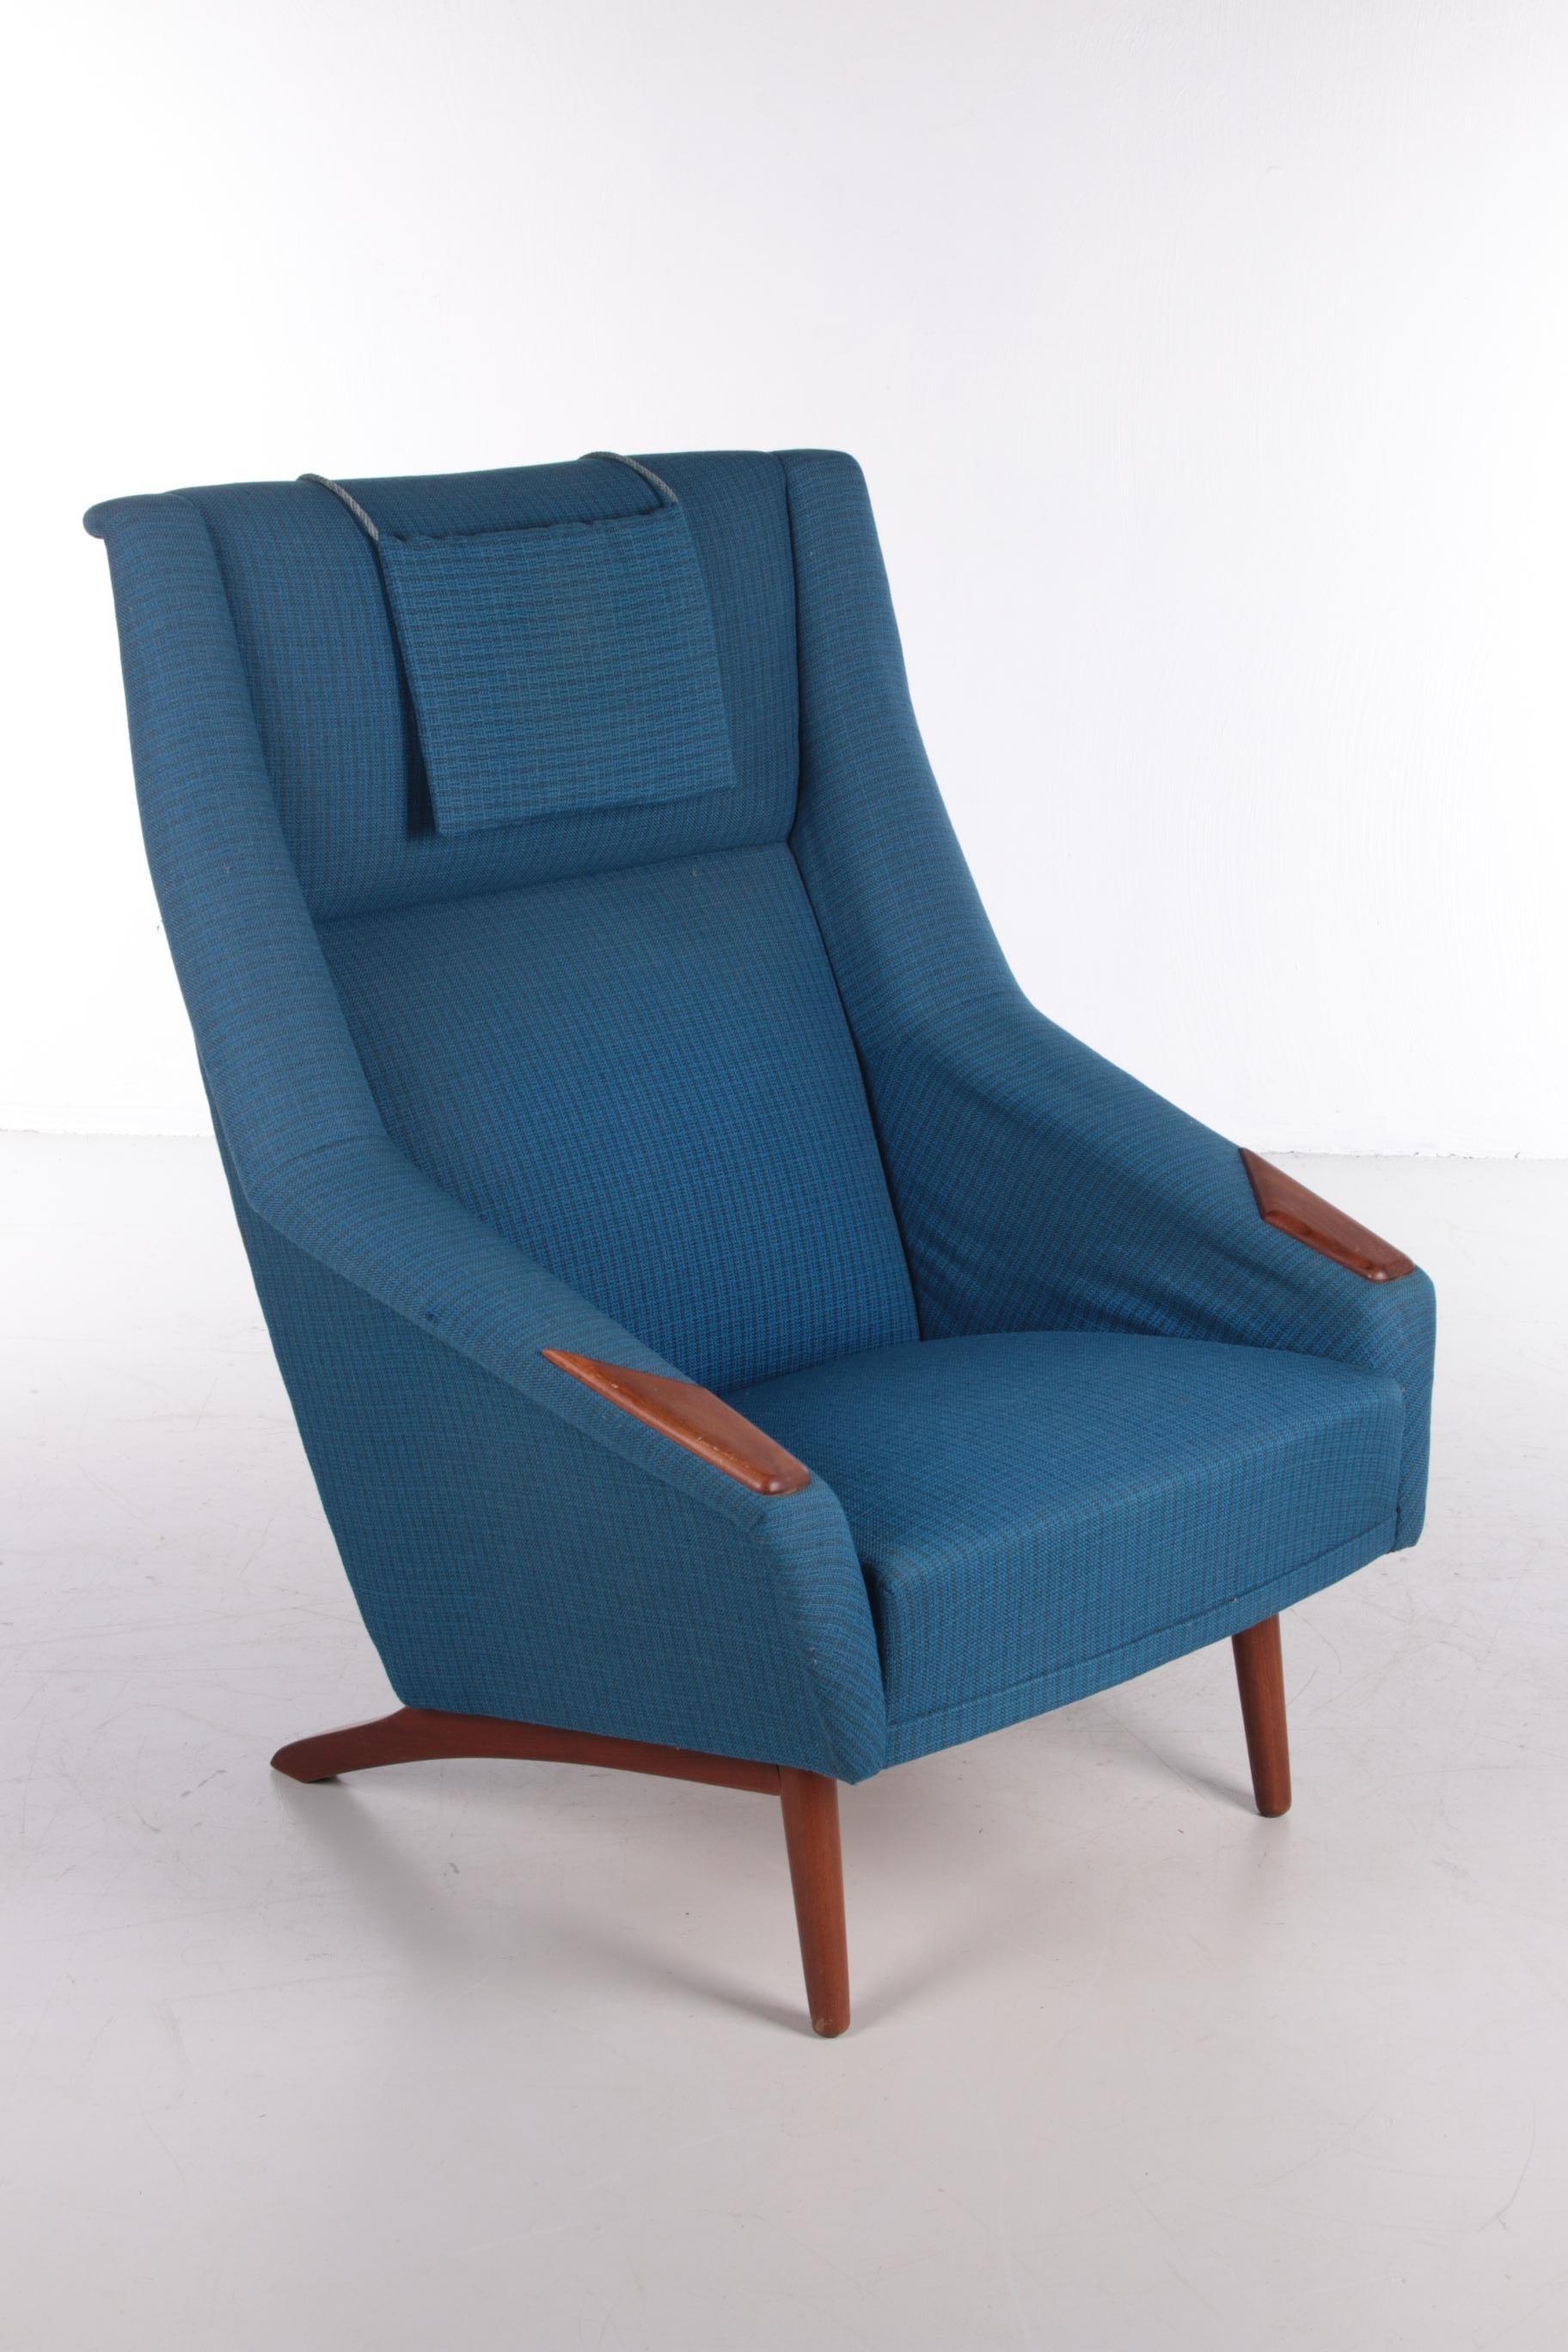 Relaxing Chair Folke Ohlsson Made by Fritz Hansen 4